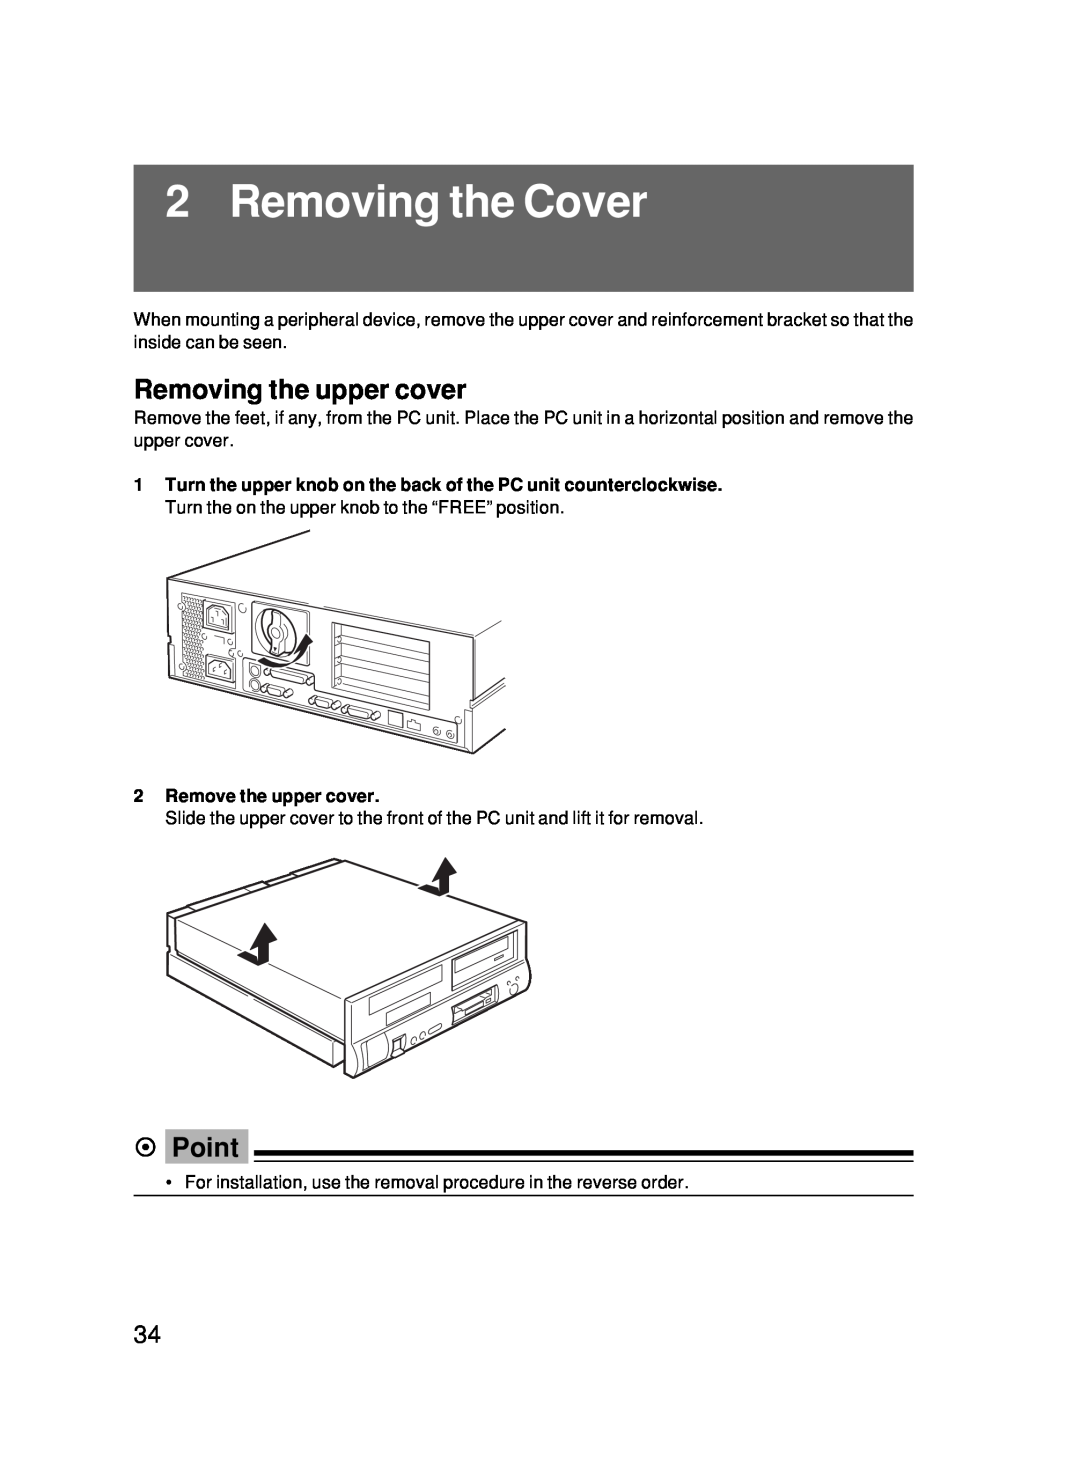 Fujitsu 500 user manual Removing the Cover, Removing the upper cover, Remove the upper cover, Point 